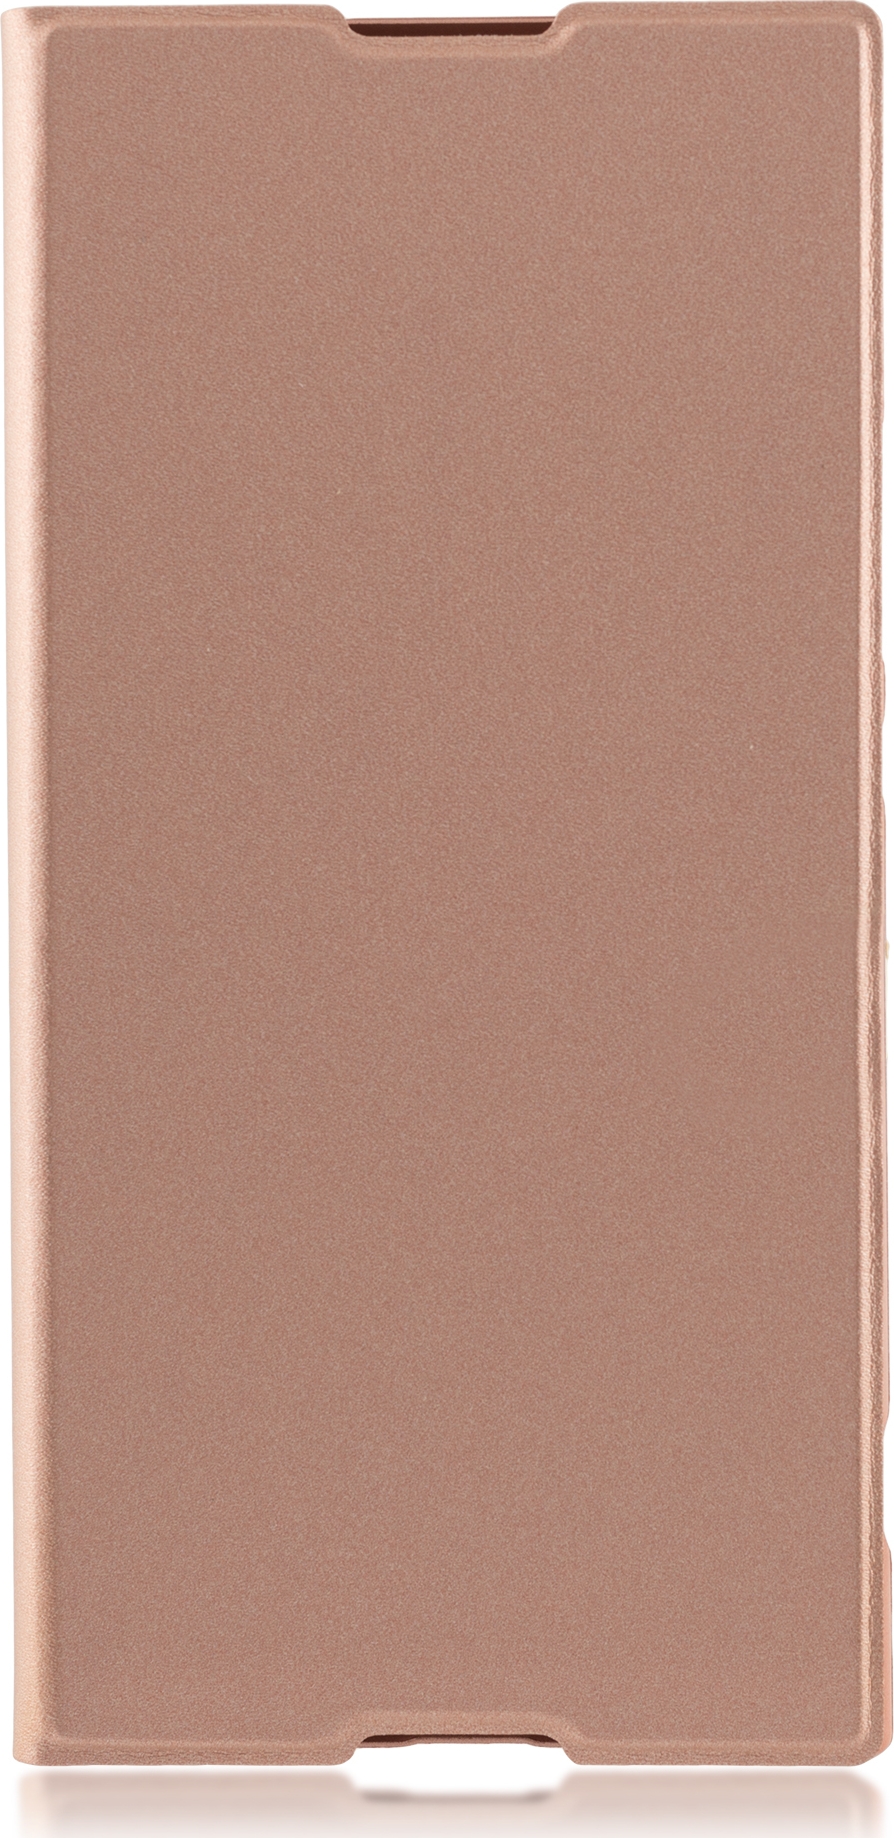 Чехол Brosco Book для Sony Xperia XA1 Ultra, розовый